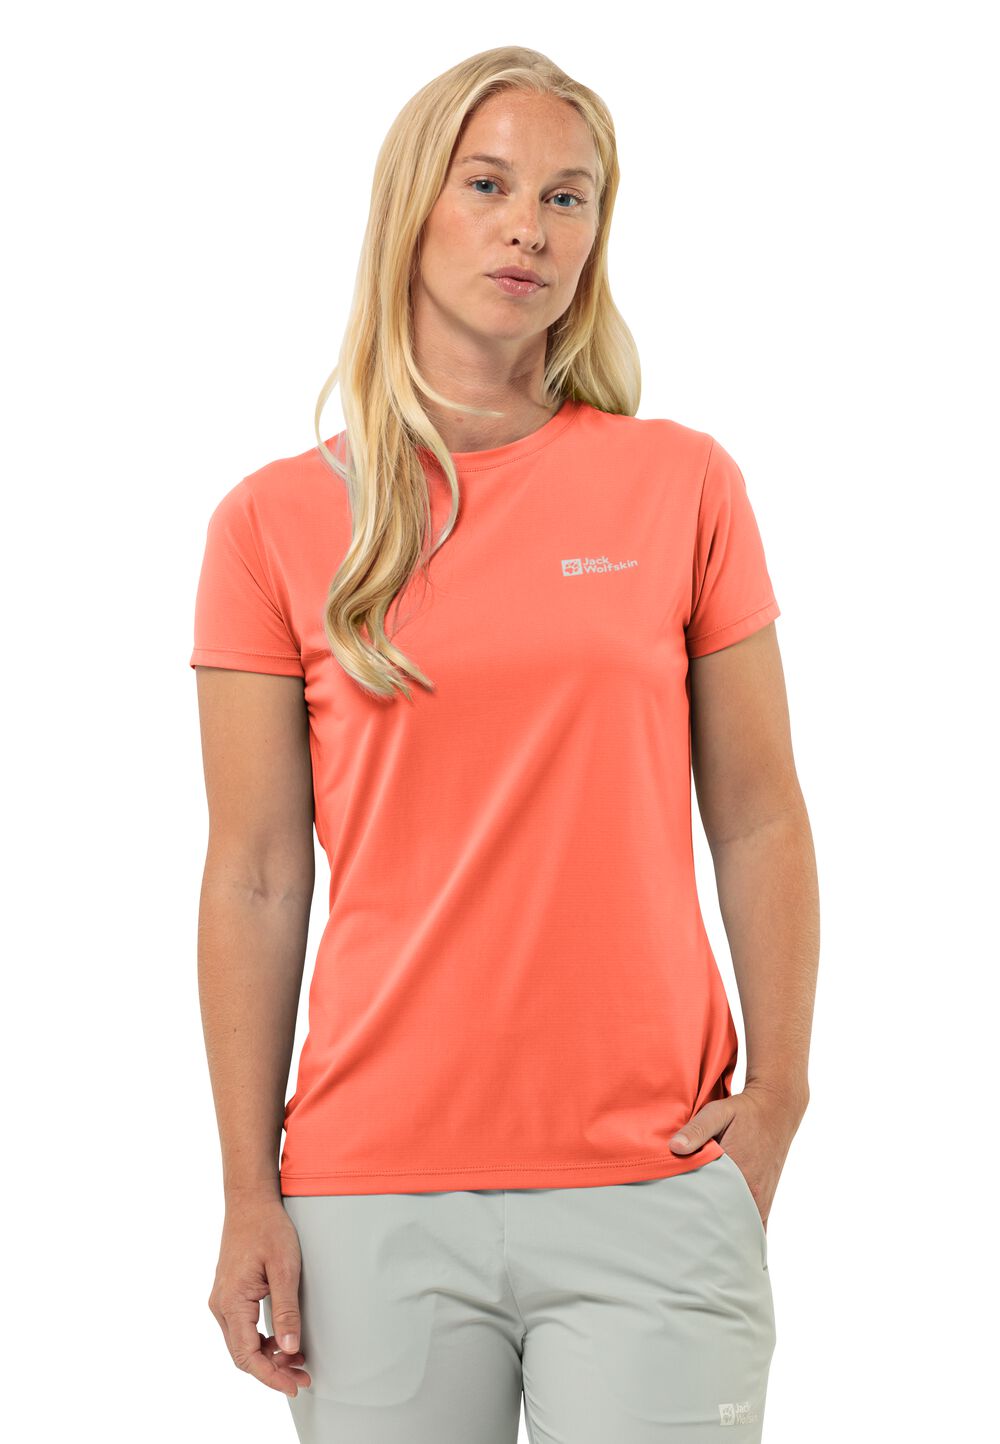 Jack Wolfskin Prelight Trail T-Shirt Women Functioneel shirt Dames XS rood digital orange